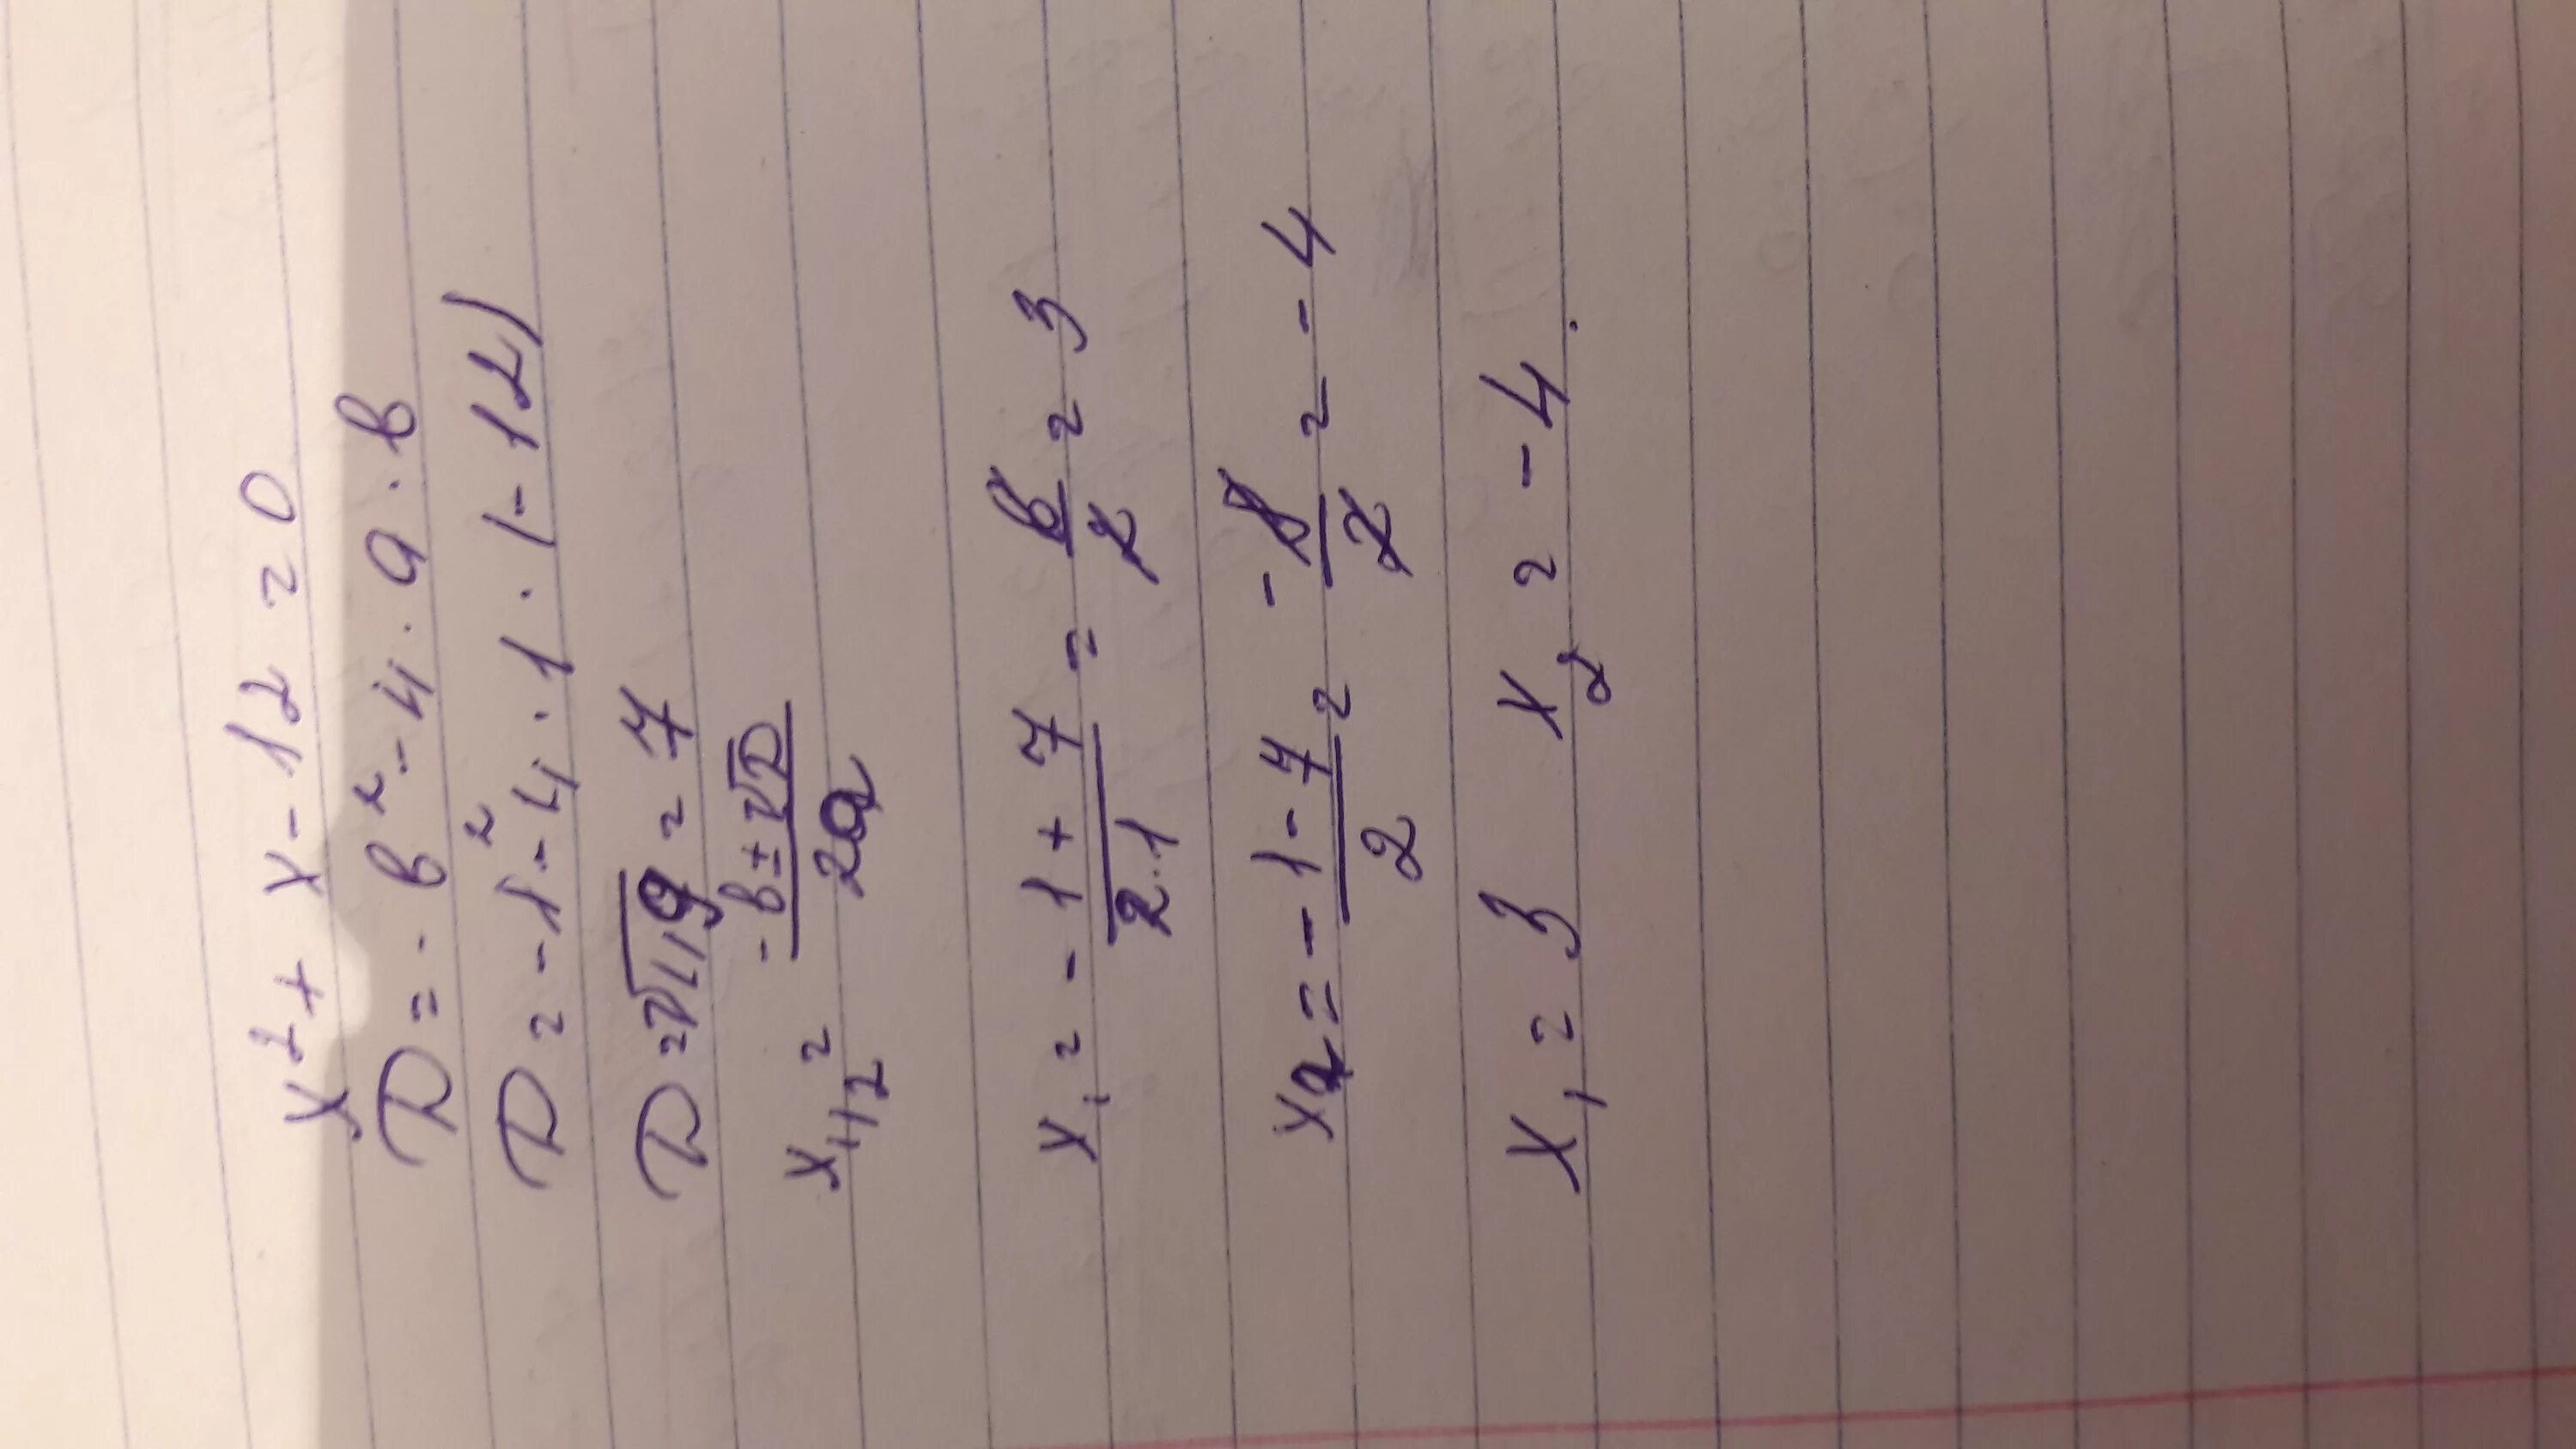 X 2 −2x 1 − (x−1) 2 1 = 12 1. X2 x 12 0 решение уравнения. Решите уравнение 2 x +− = x 12 0.. X2+x-12 0. 2x 12 8x 12 0